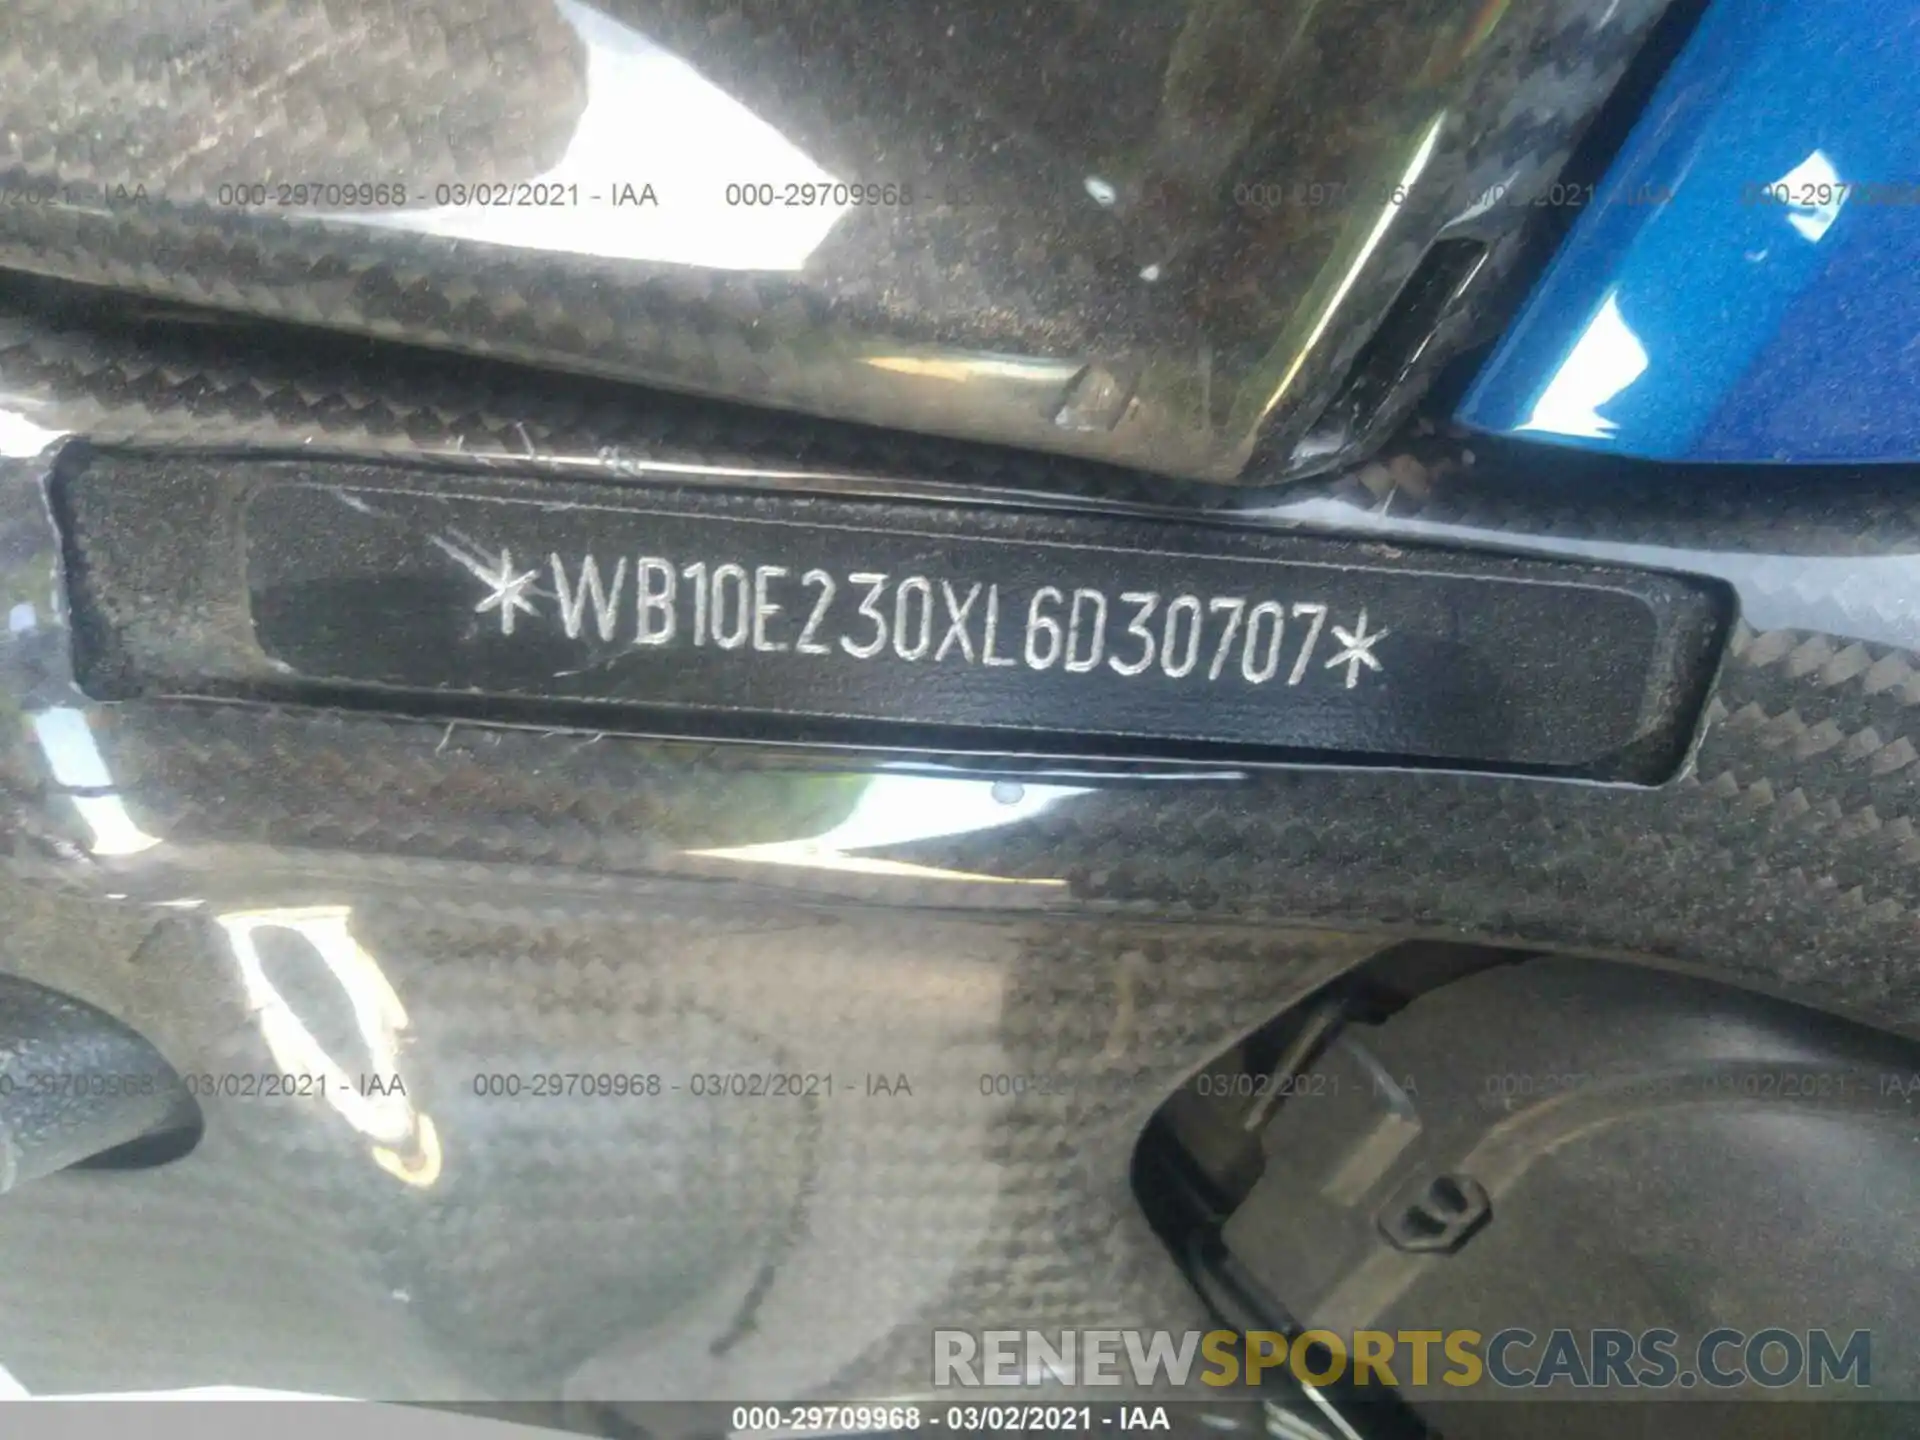 10 Photograph of a damaged car WB10E230XL6D30707 BMW S 1000 2020